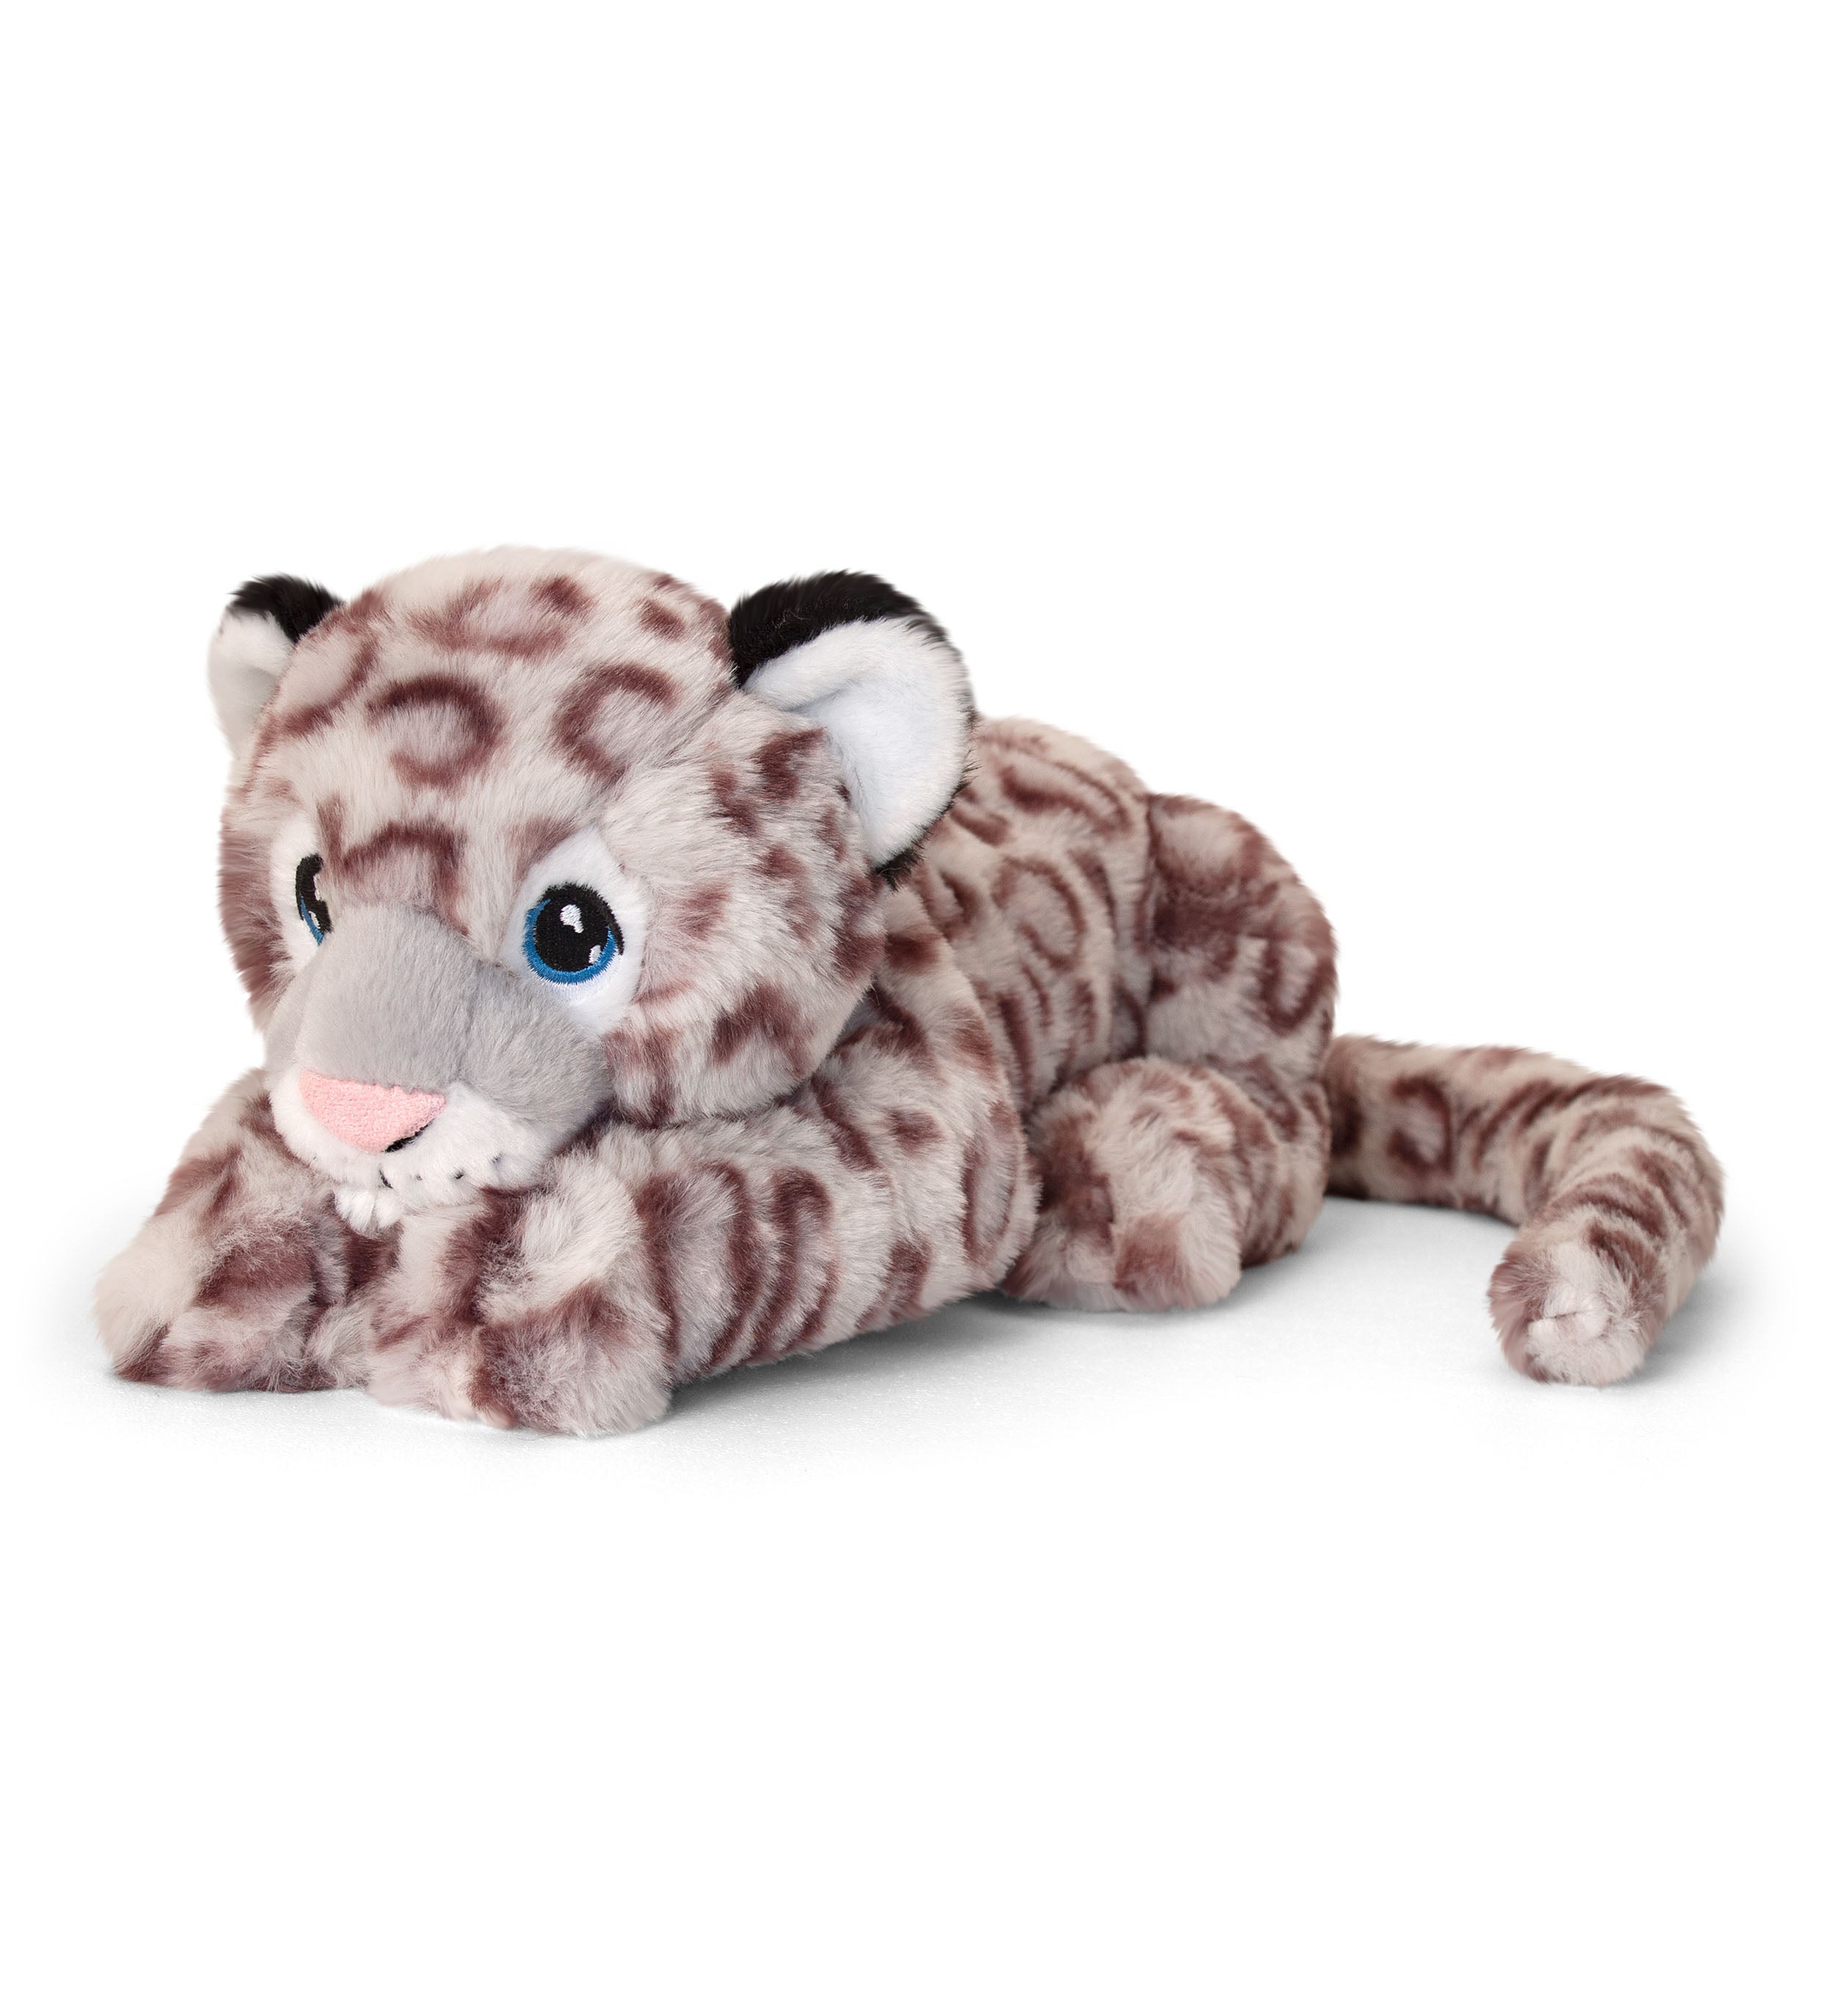 Snow Leopard Soft Toy - Keel Toys - 35cm